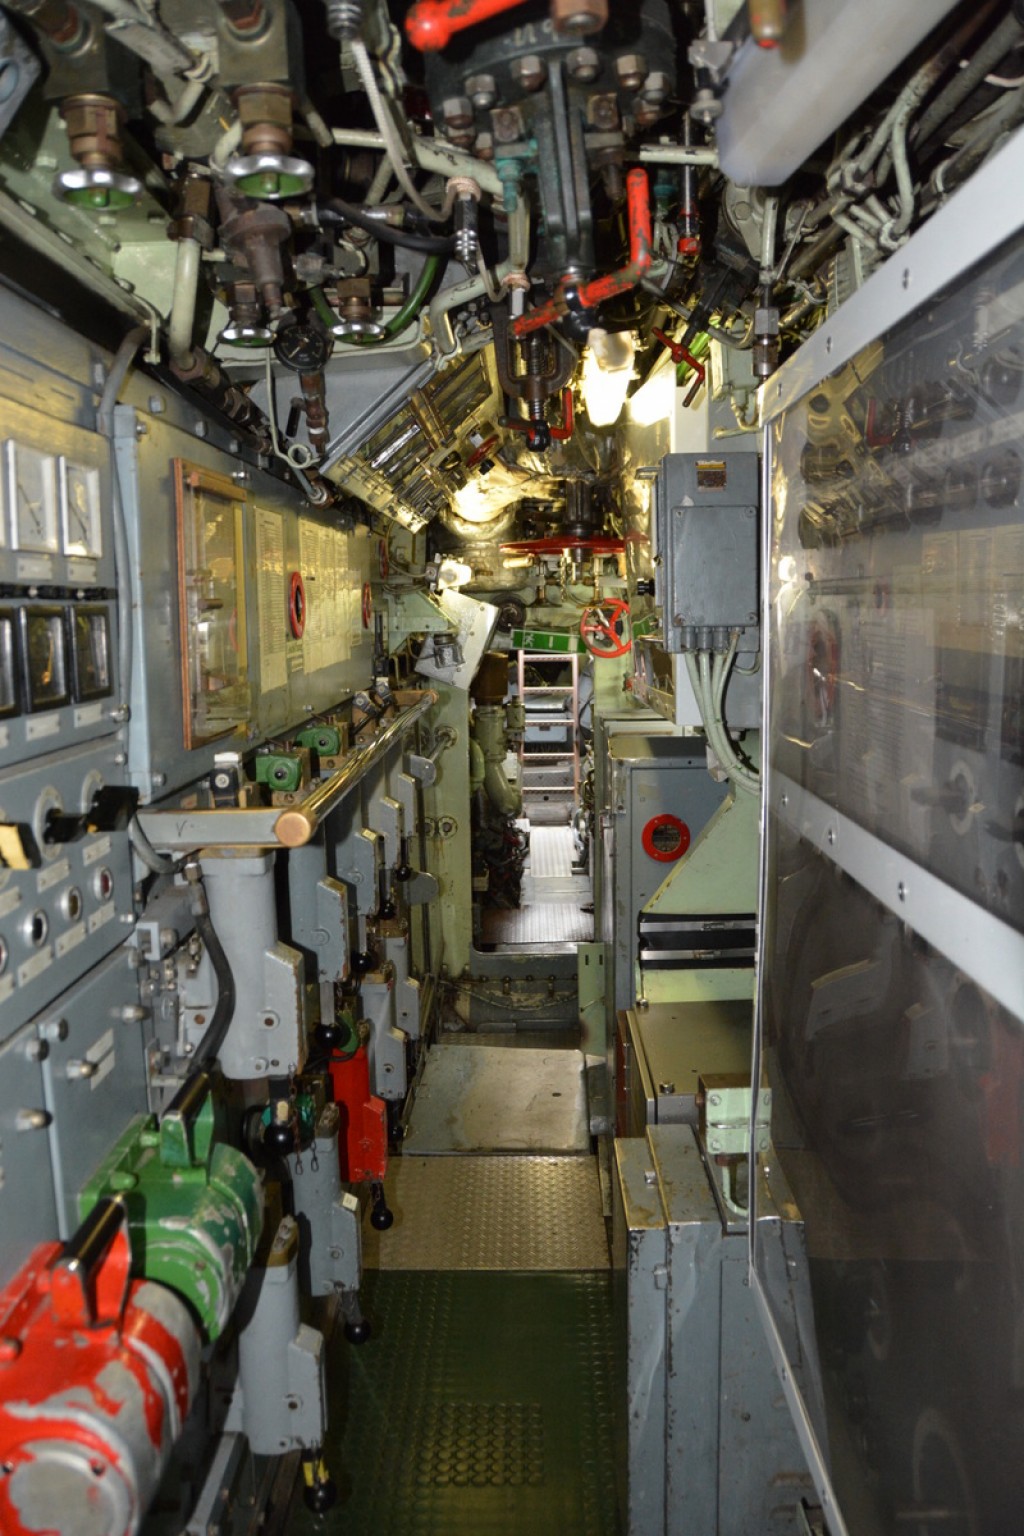 Inside the U-Boat